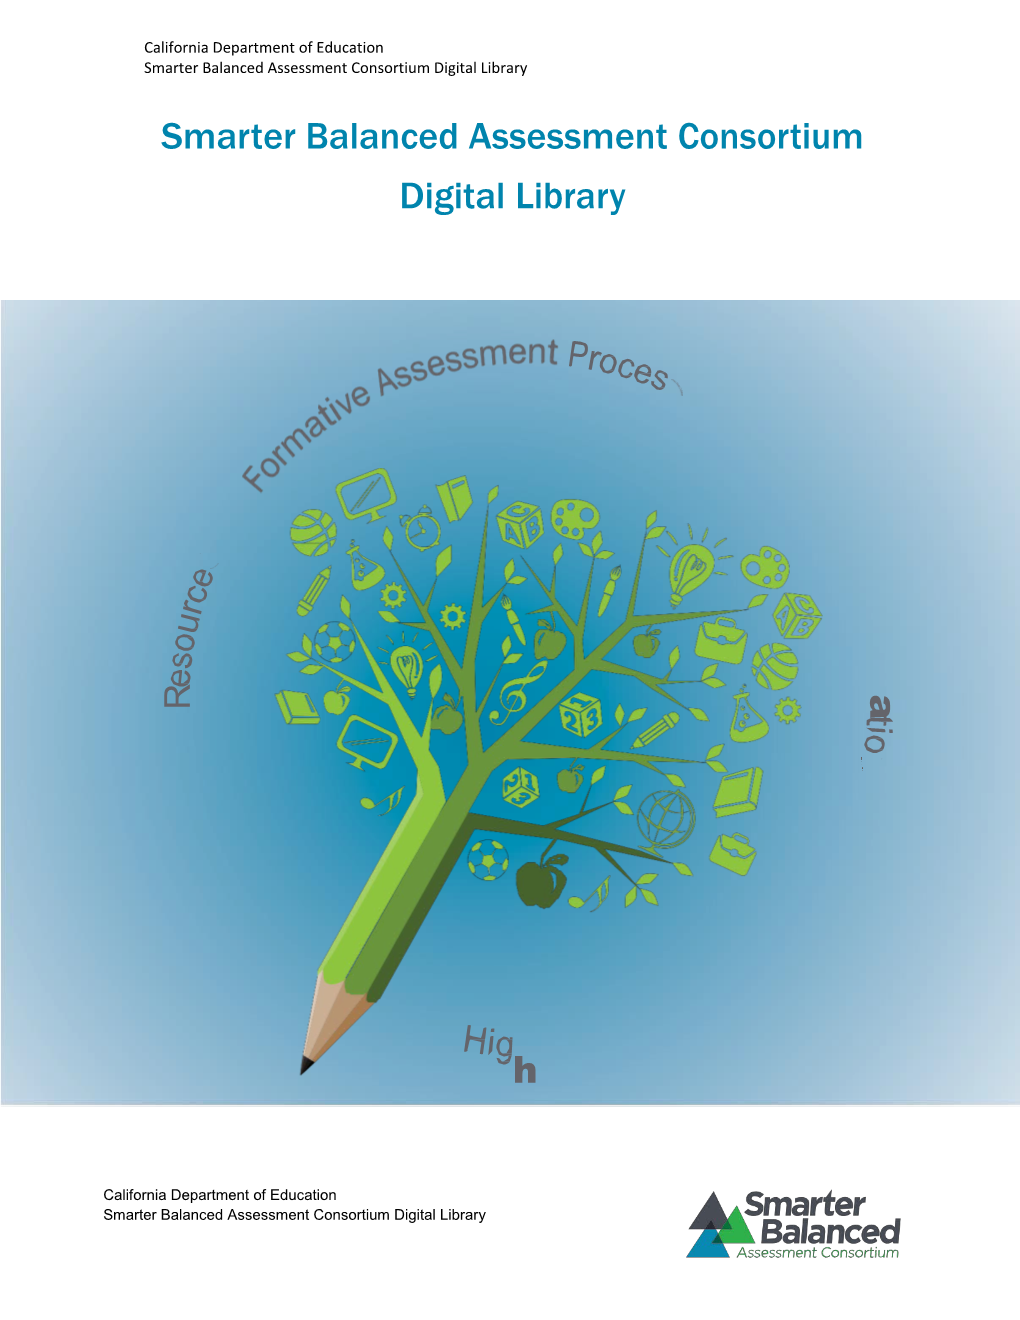 Smarter Balanced Assessment Consortium Digital Library - Letters (CA Dept of Education)